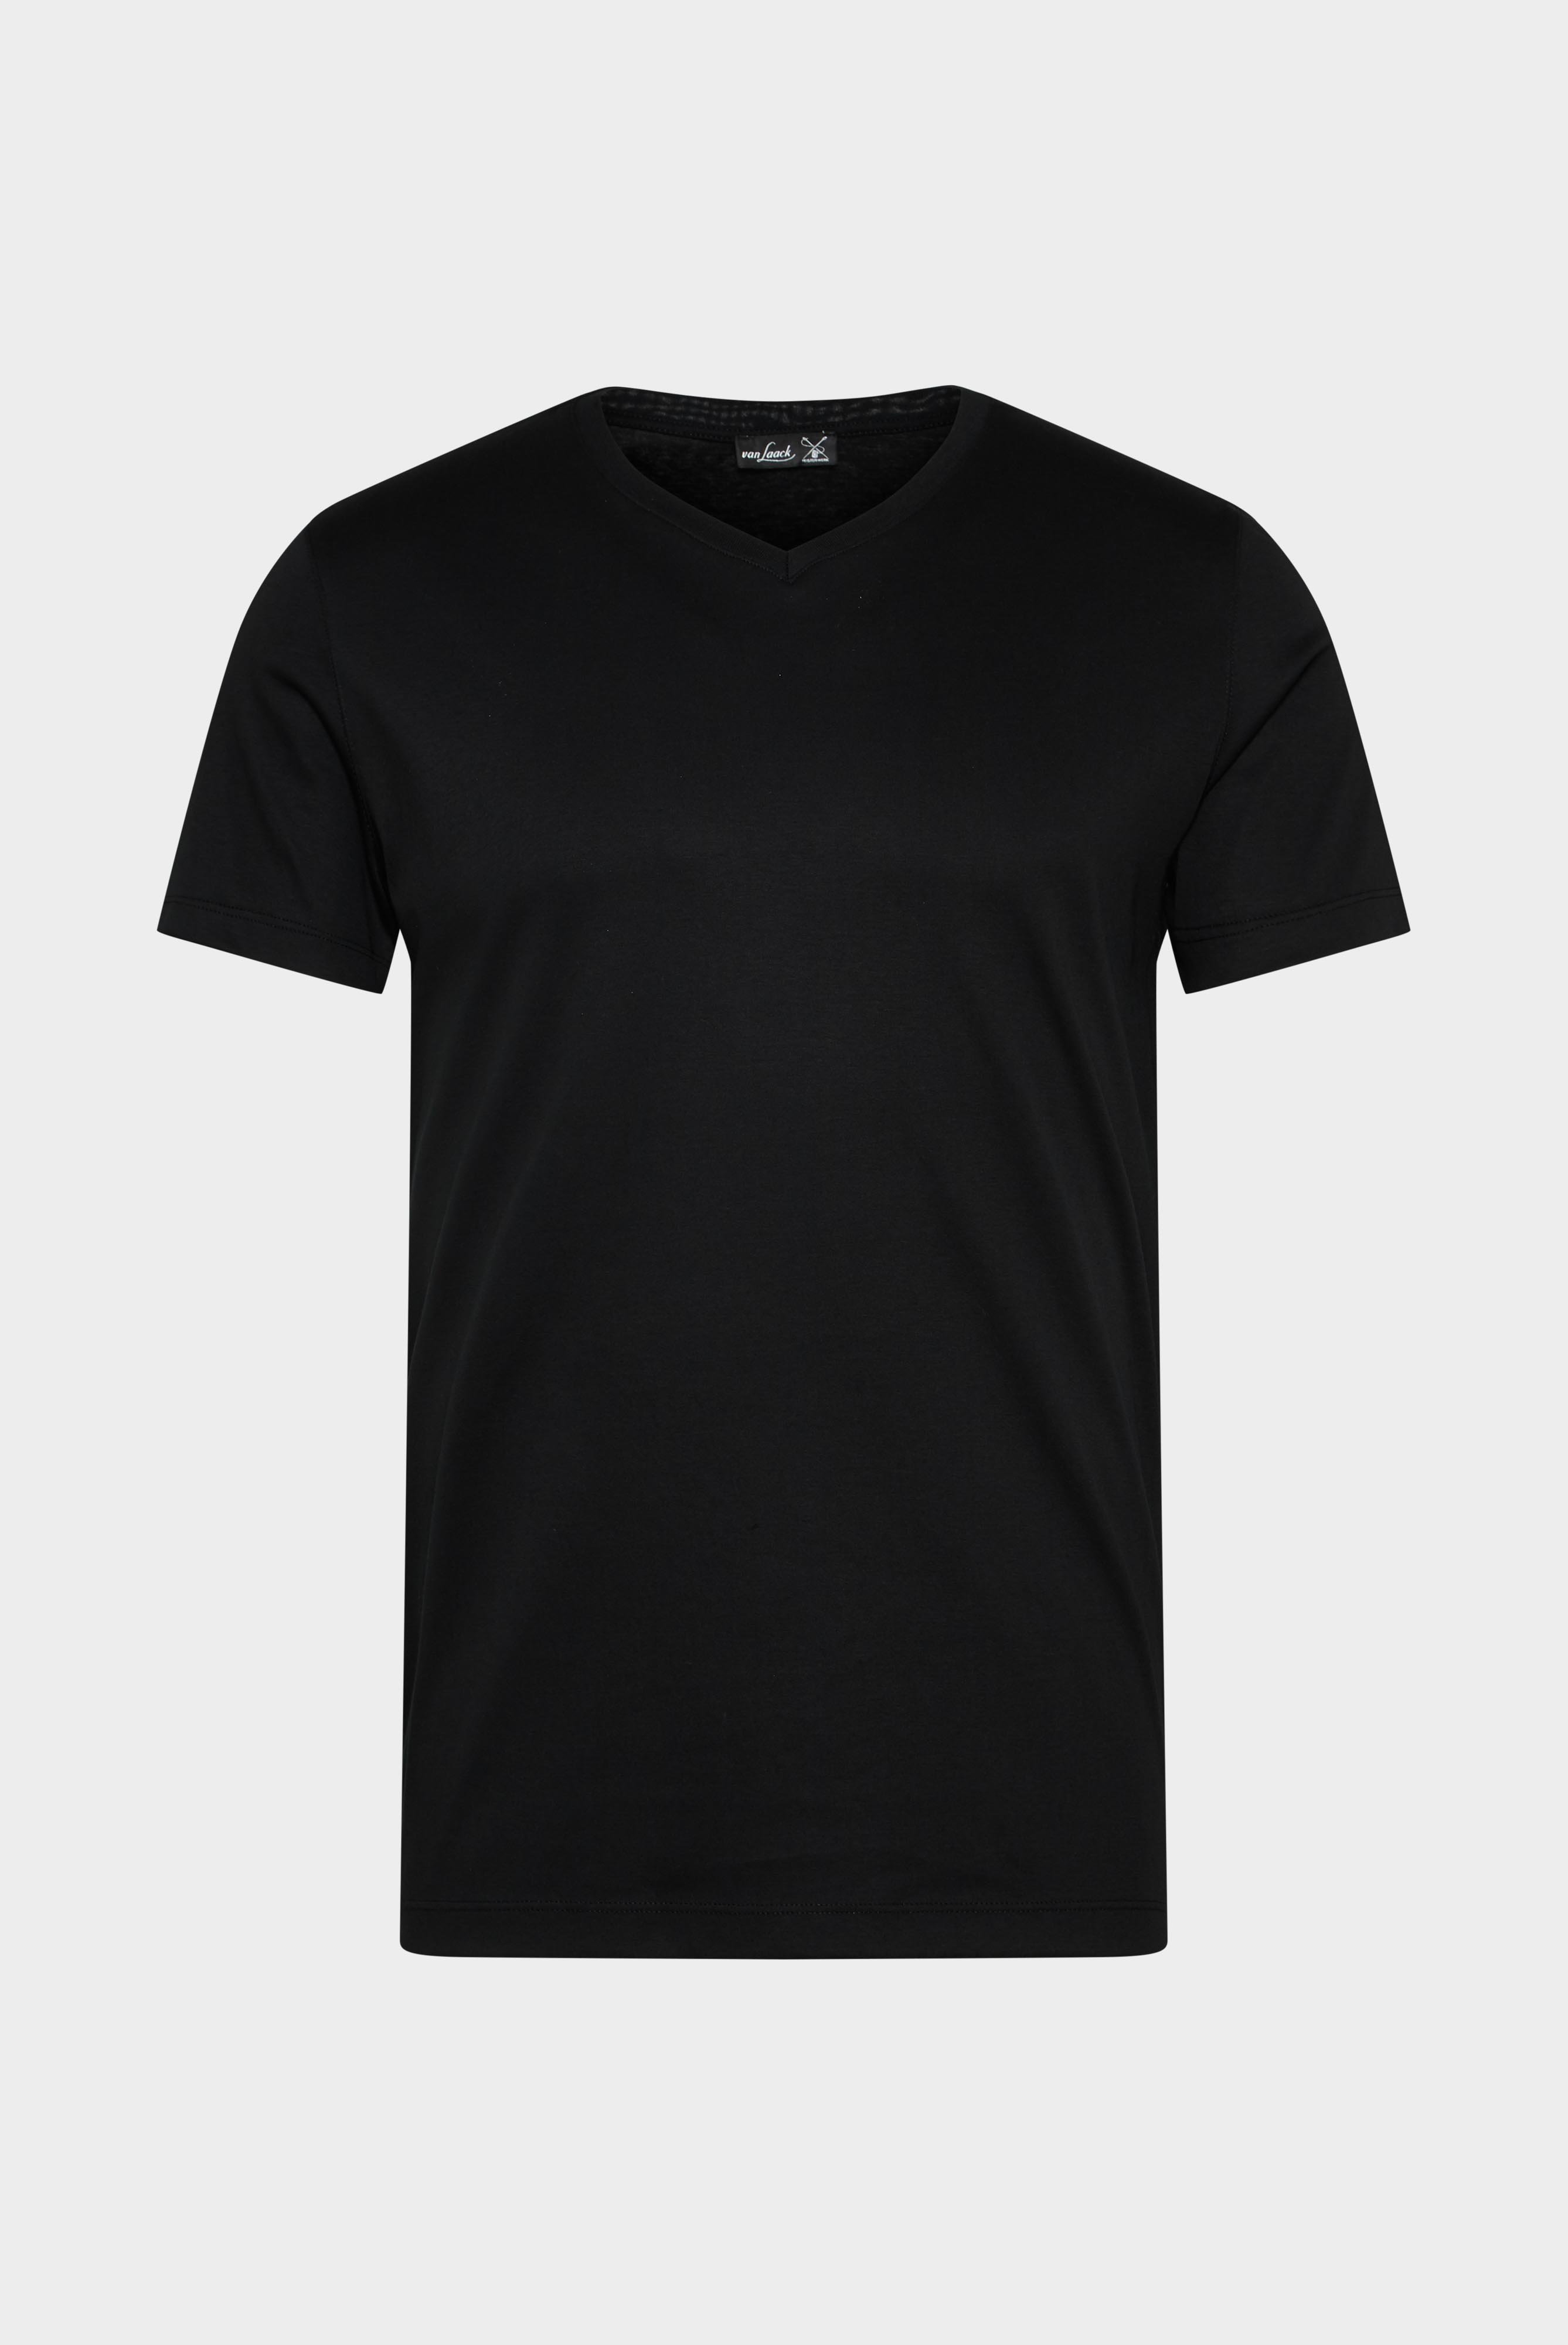 T-Shirts+Swiss Cotton Jersey V-Neck T-Shirt+20.1715.UX.180031.099.L